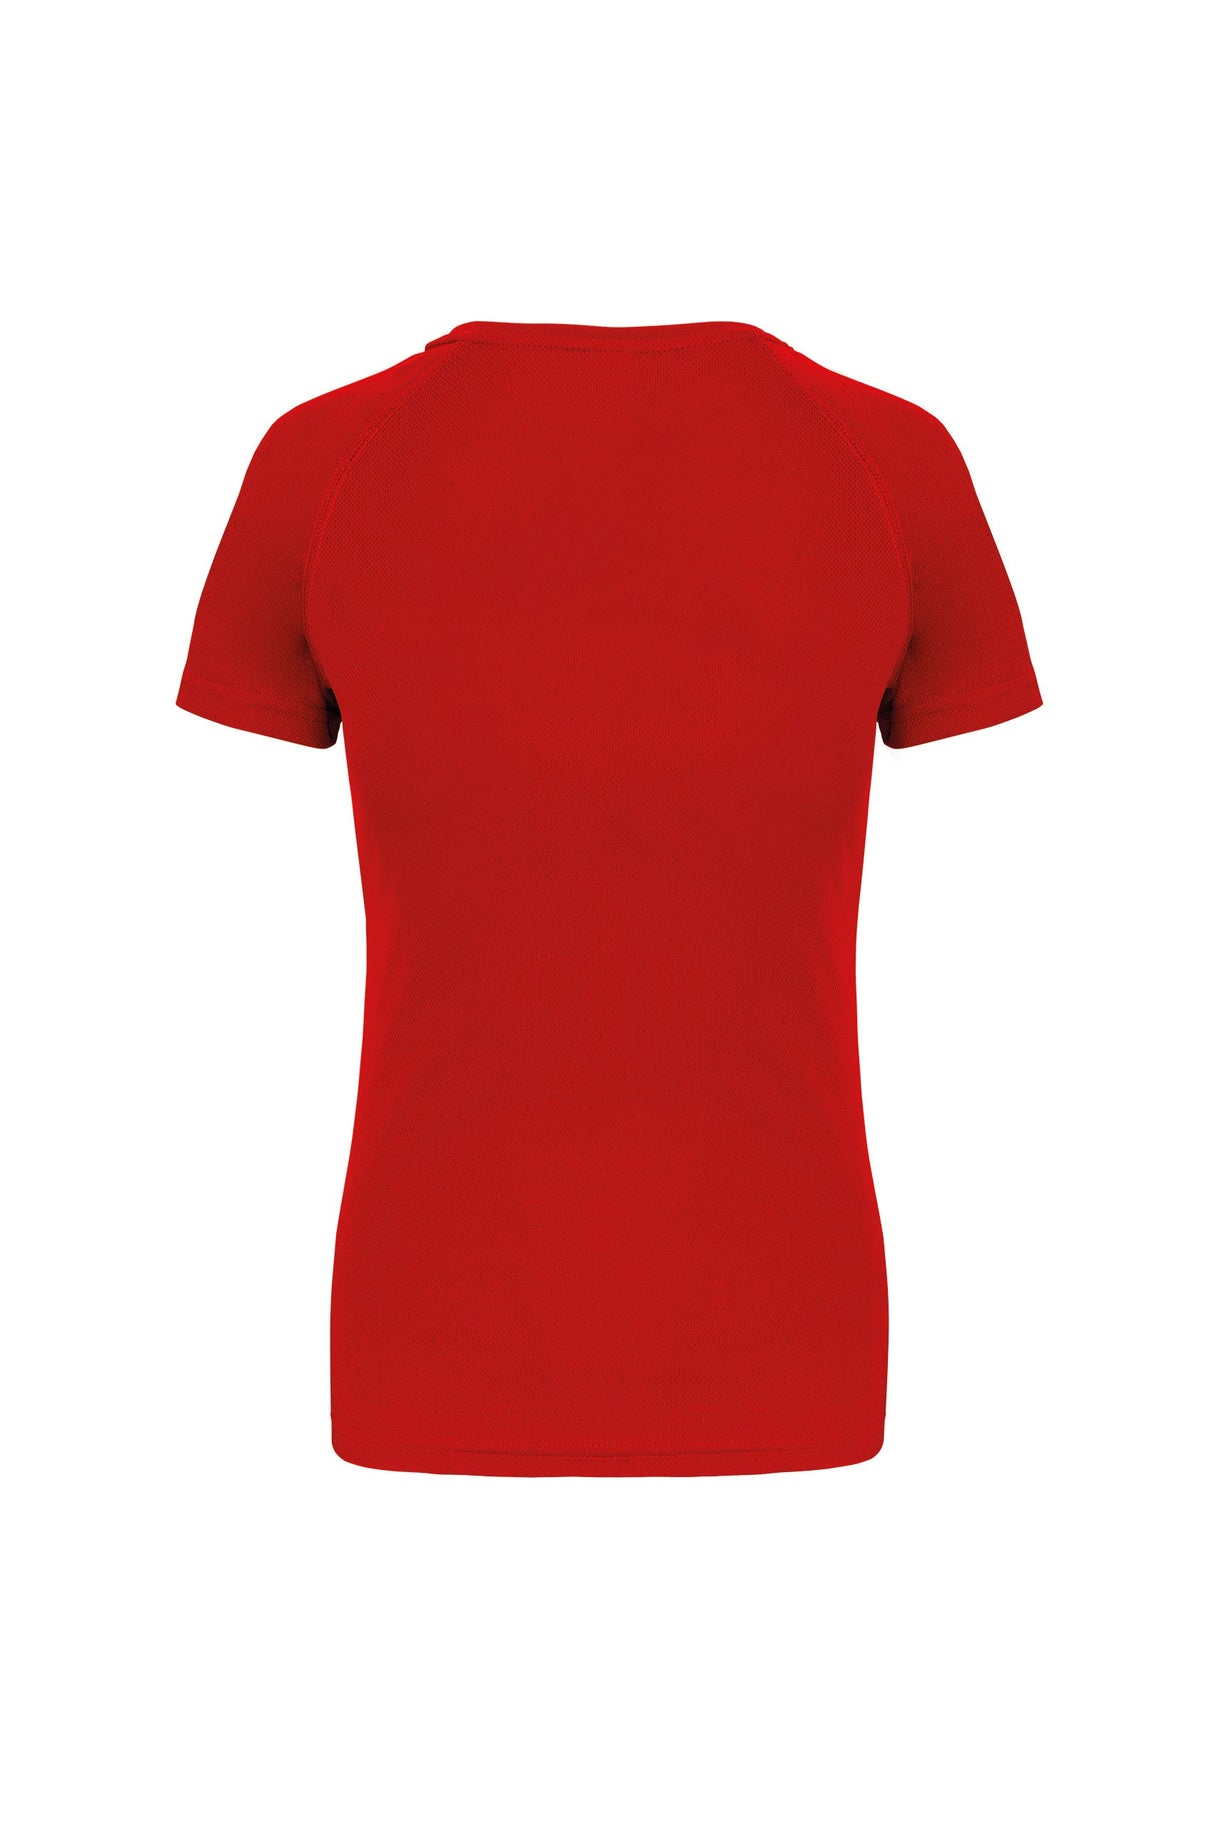 Kariban Proact Ladies' Short-Sleeved Sports T-Shirt